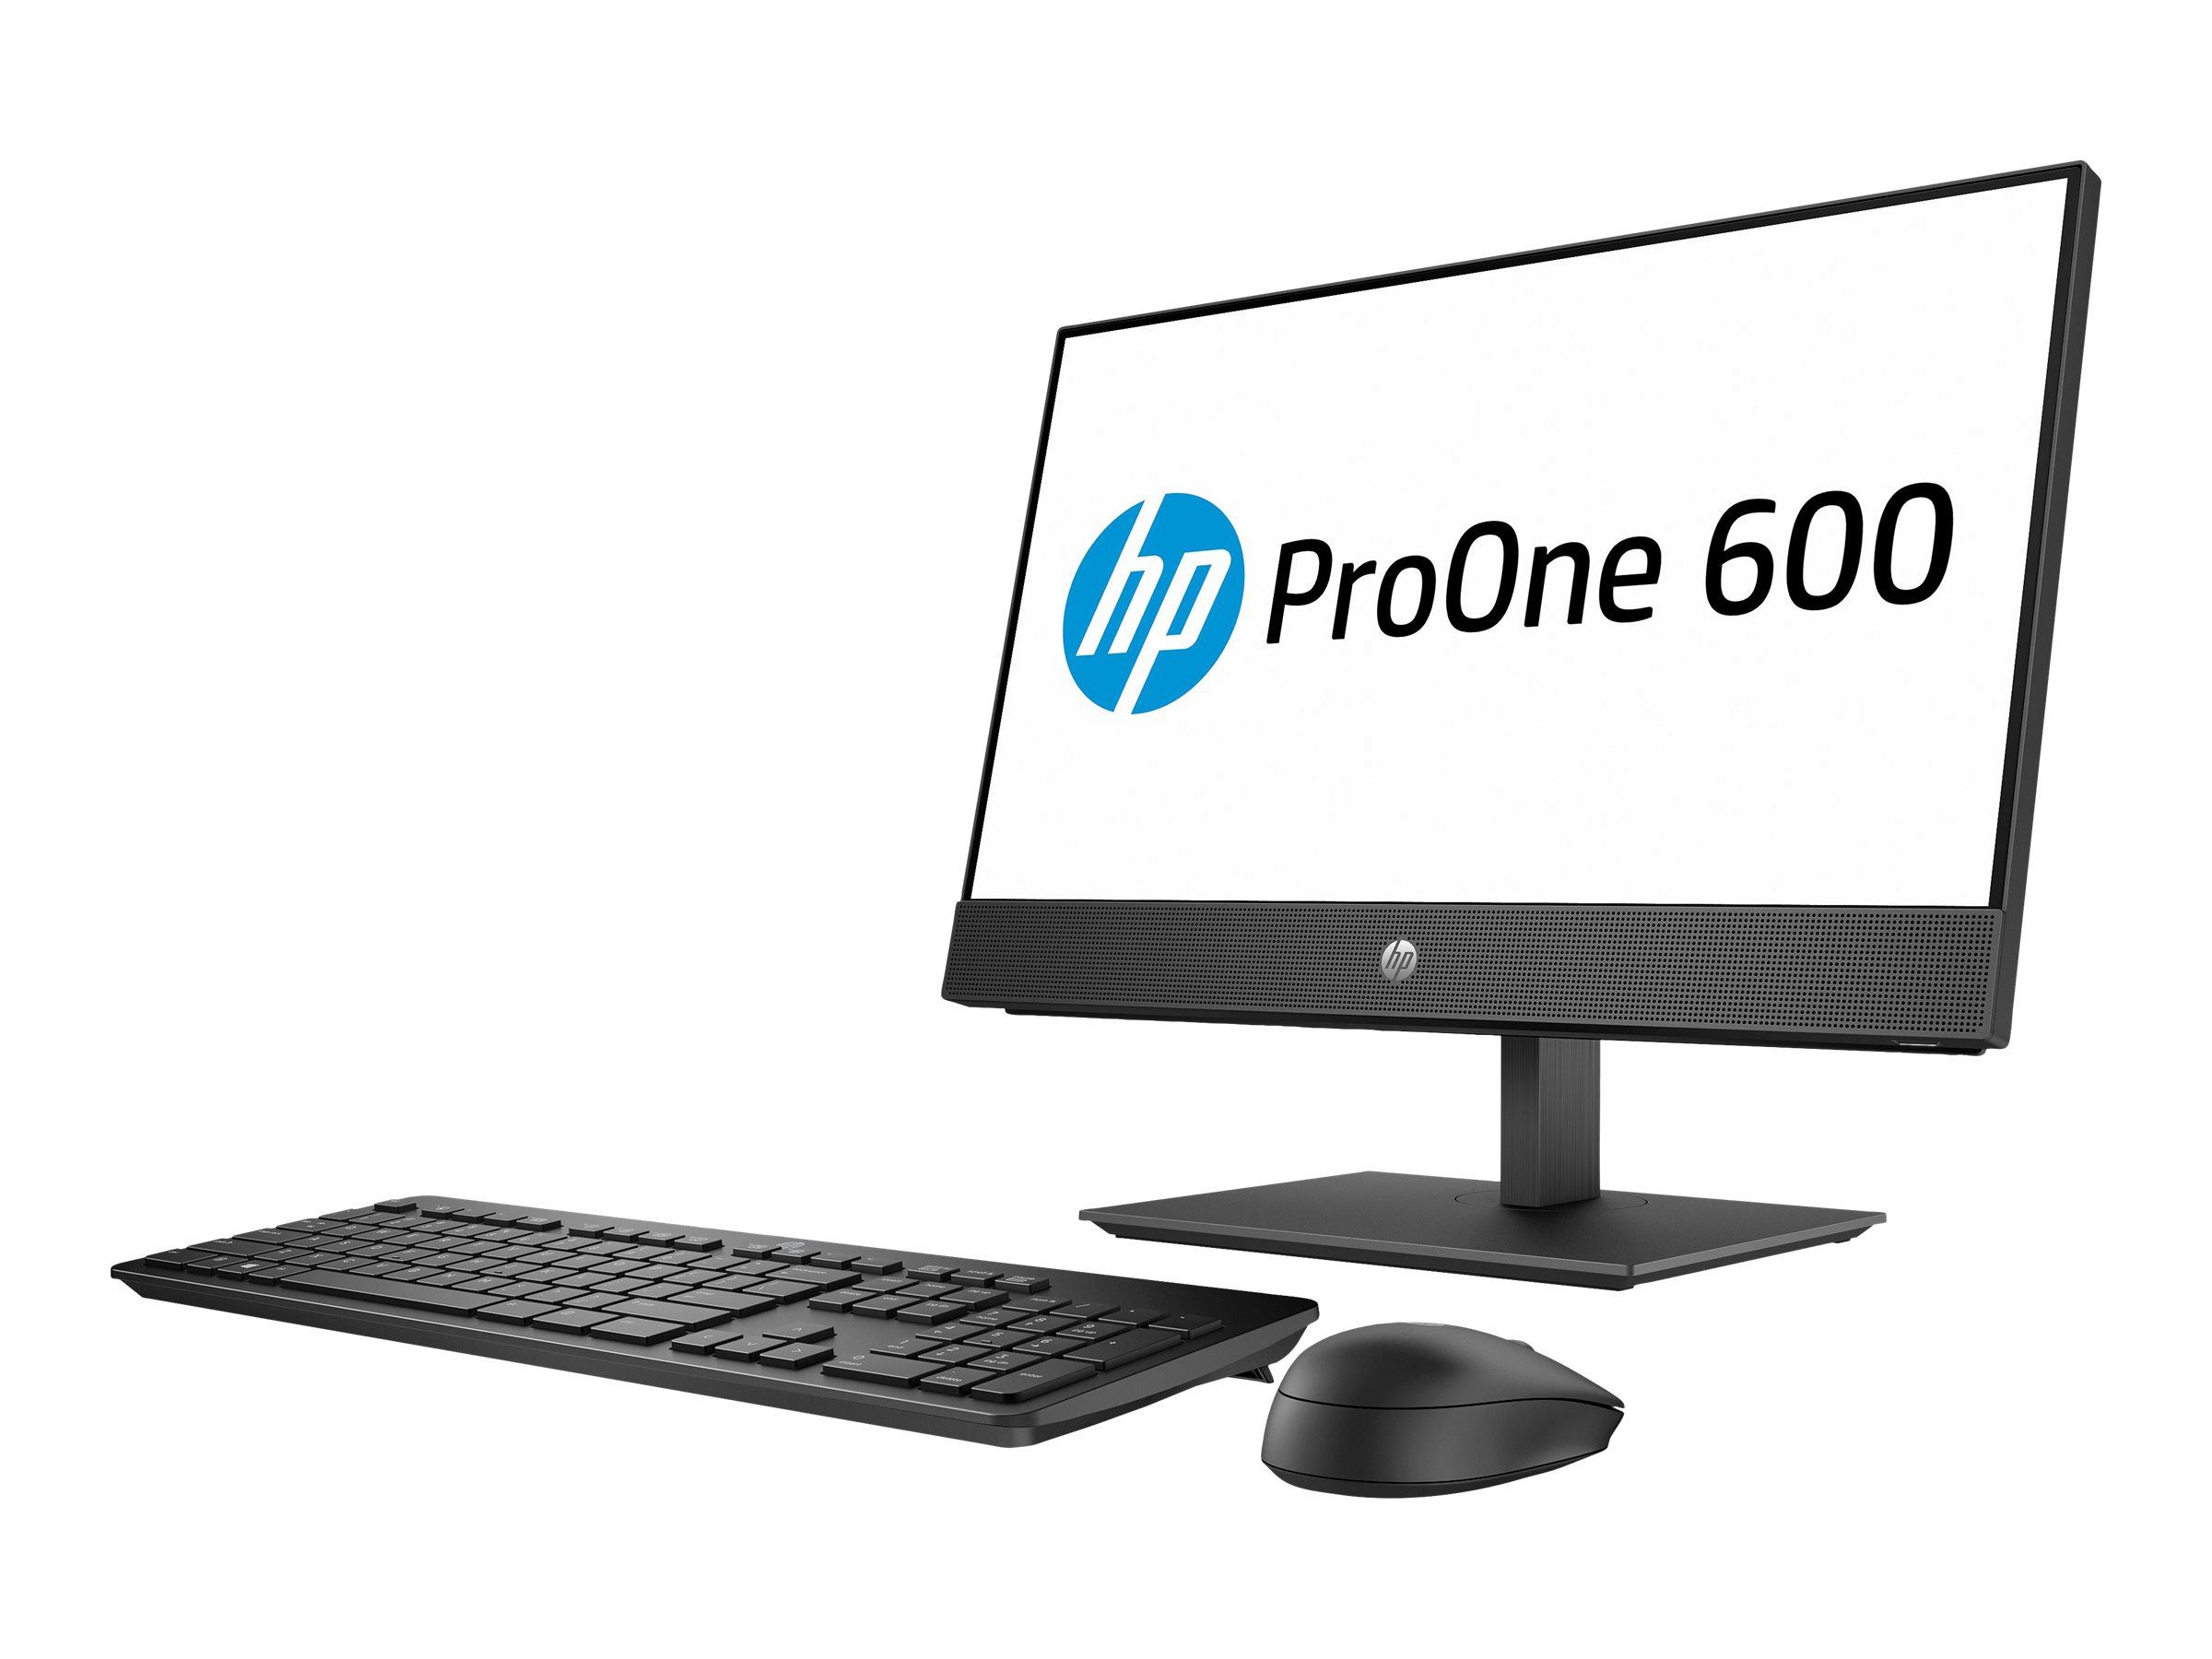 HP ProOne 600 G4 - All-in-one | www.shidirect.ca